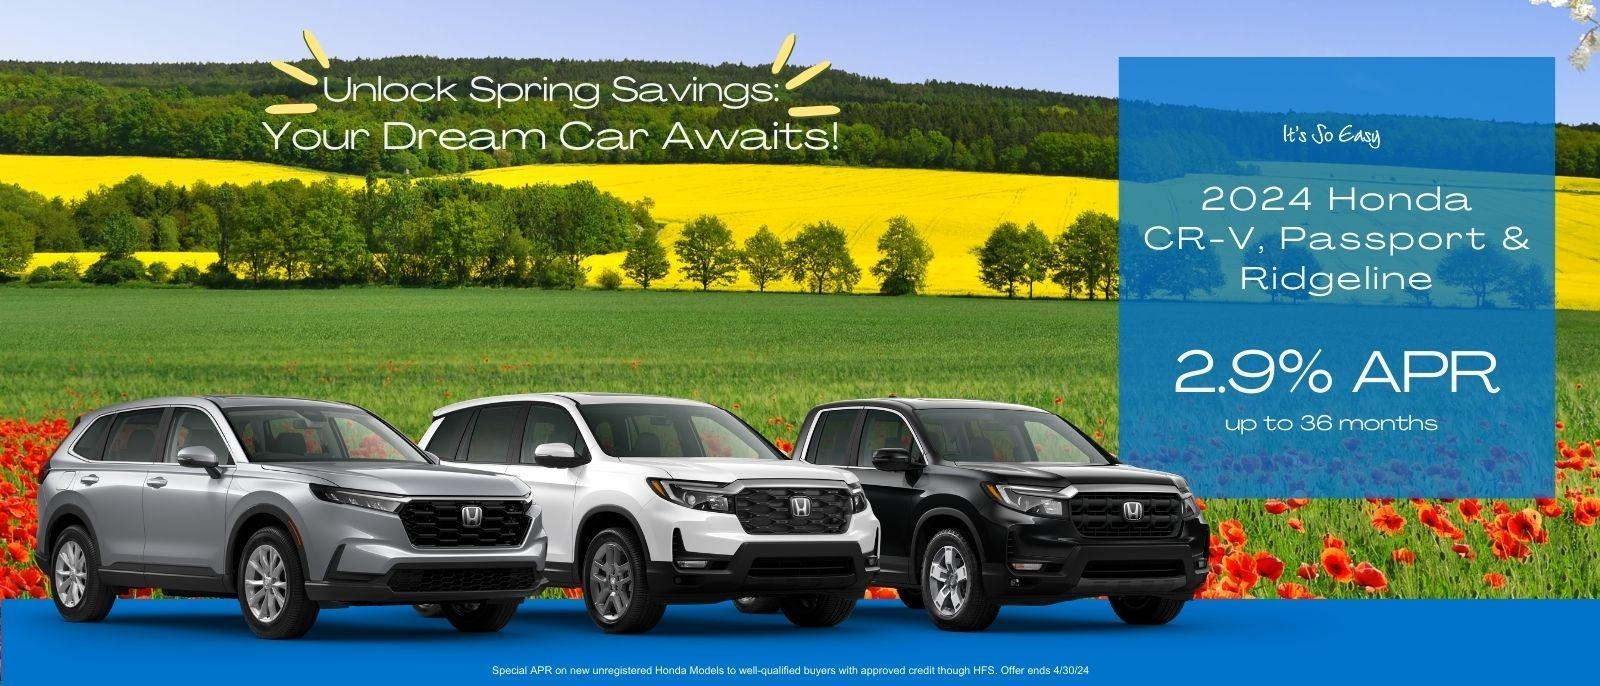 Unlock Spring Savings: Your Dream Car Awaits!

2024 Honda CR-V, Passport & Ridgeline 

2.9%APR up to 36 months